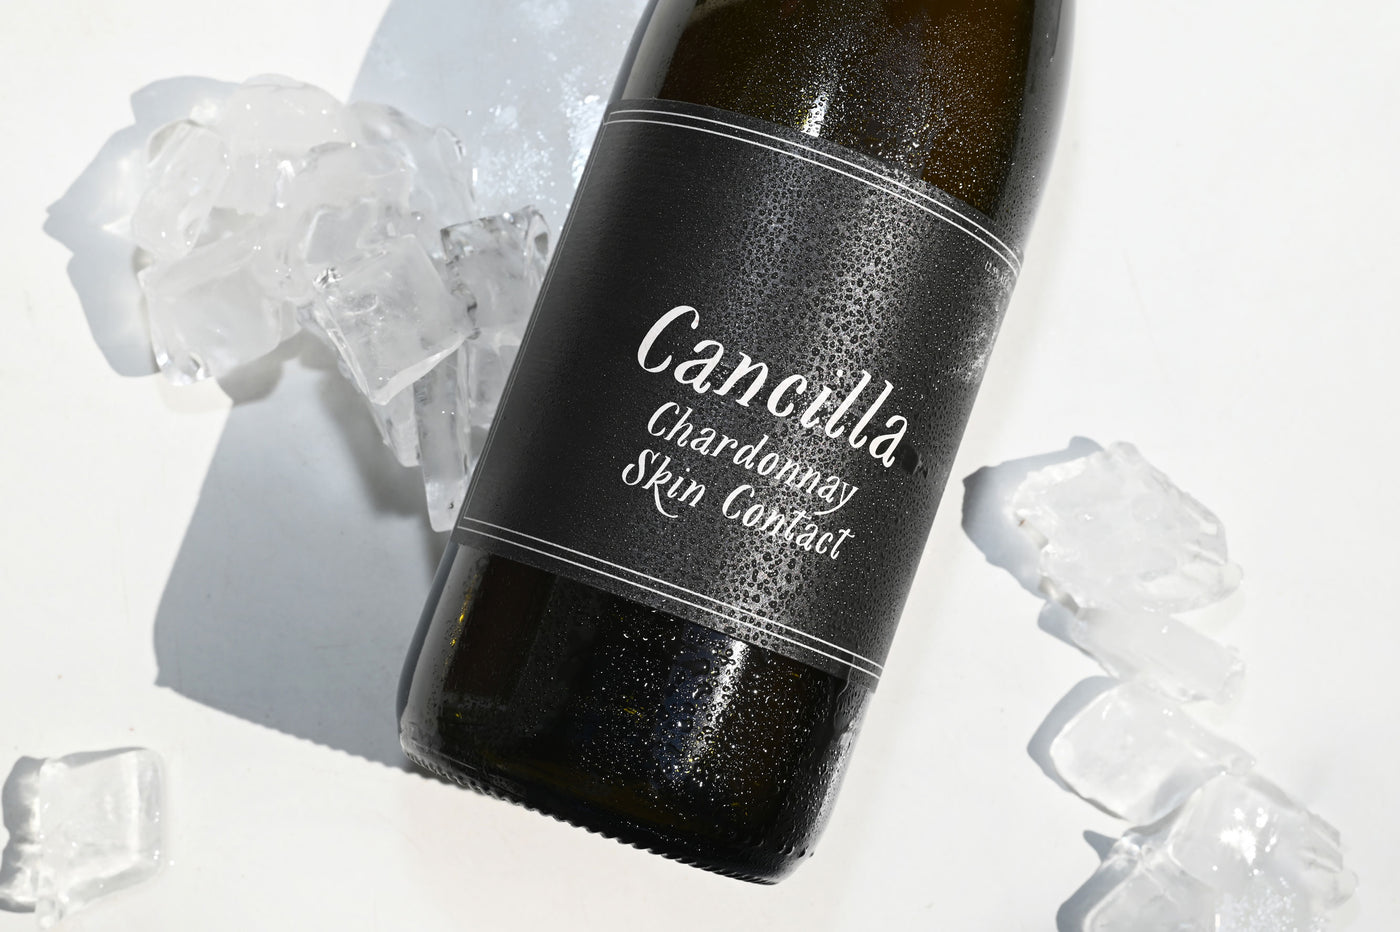 2021 Cancilla Chardonnay Skin Contact